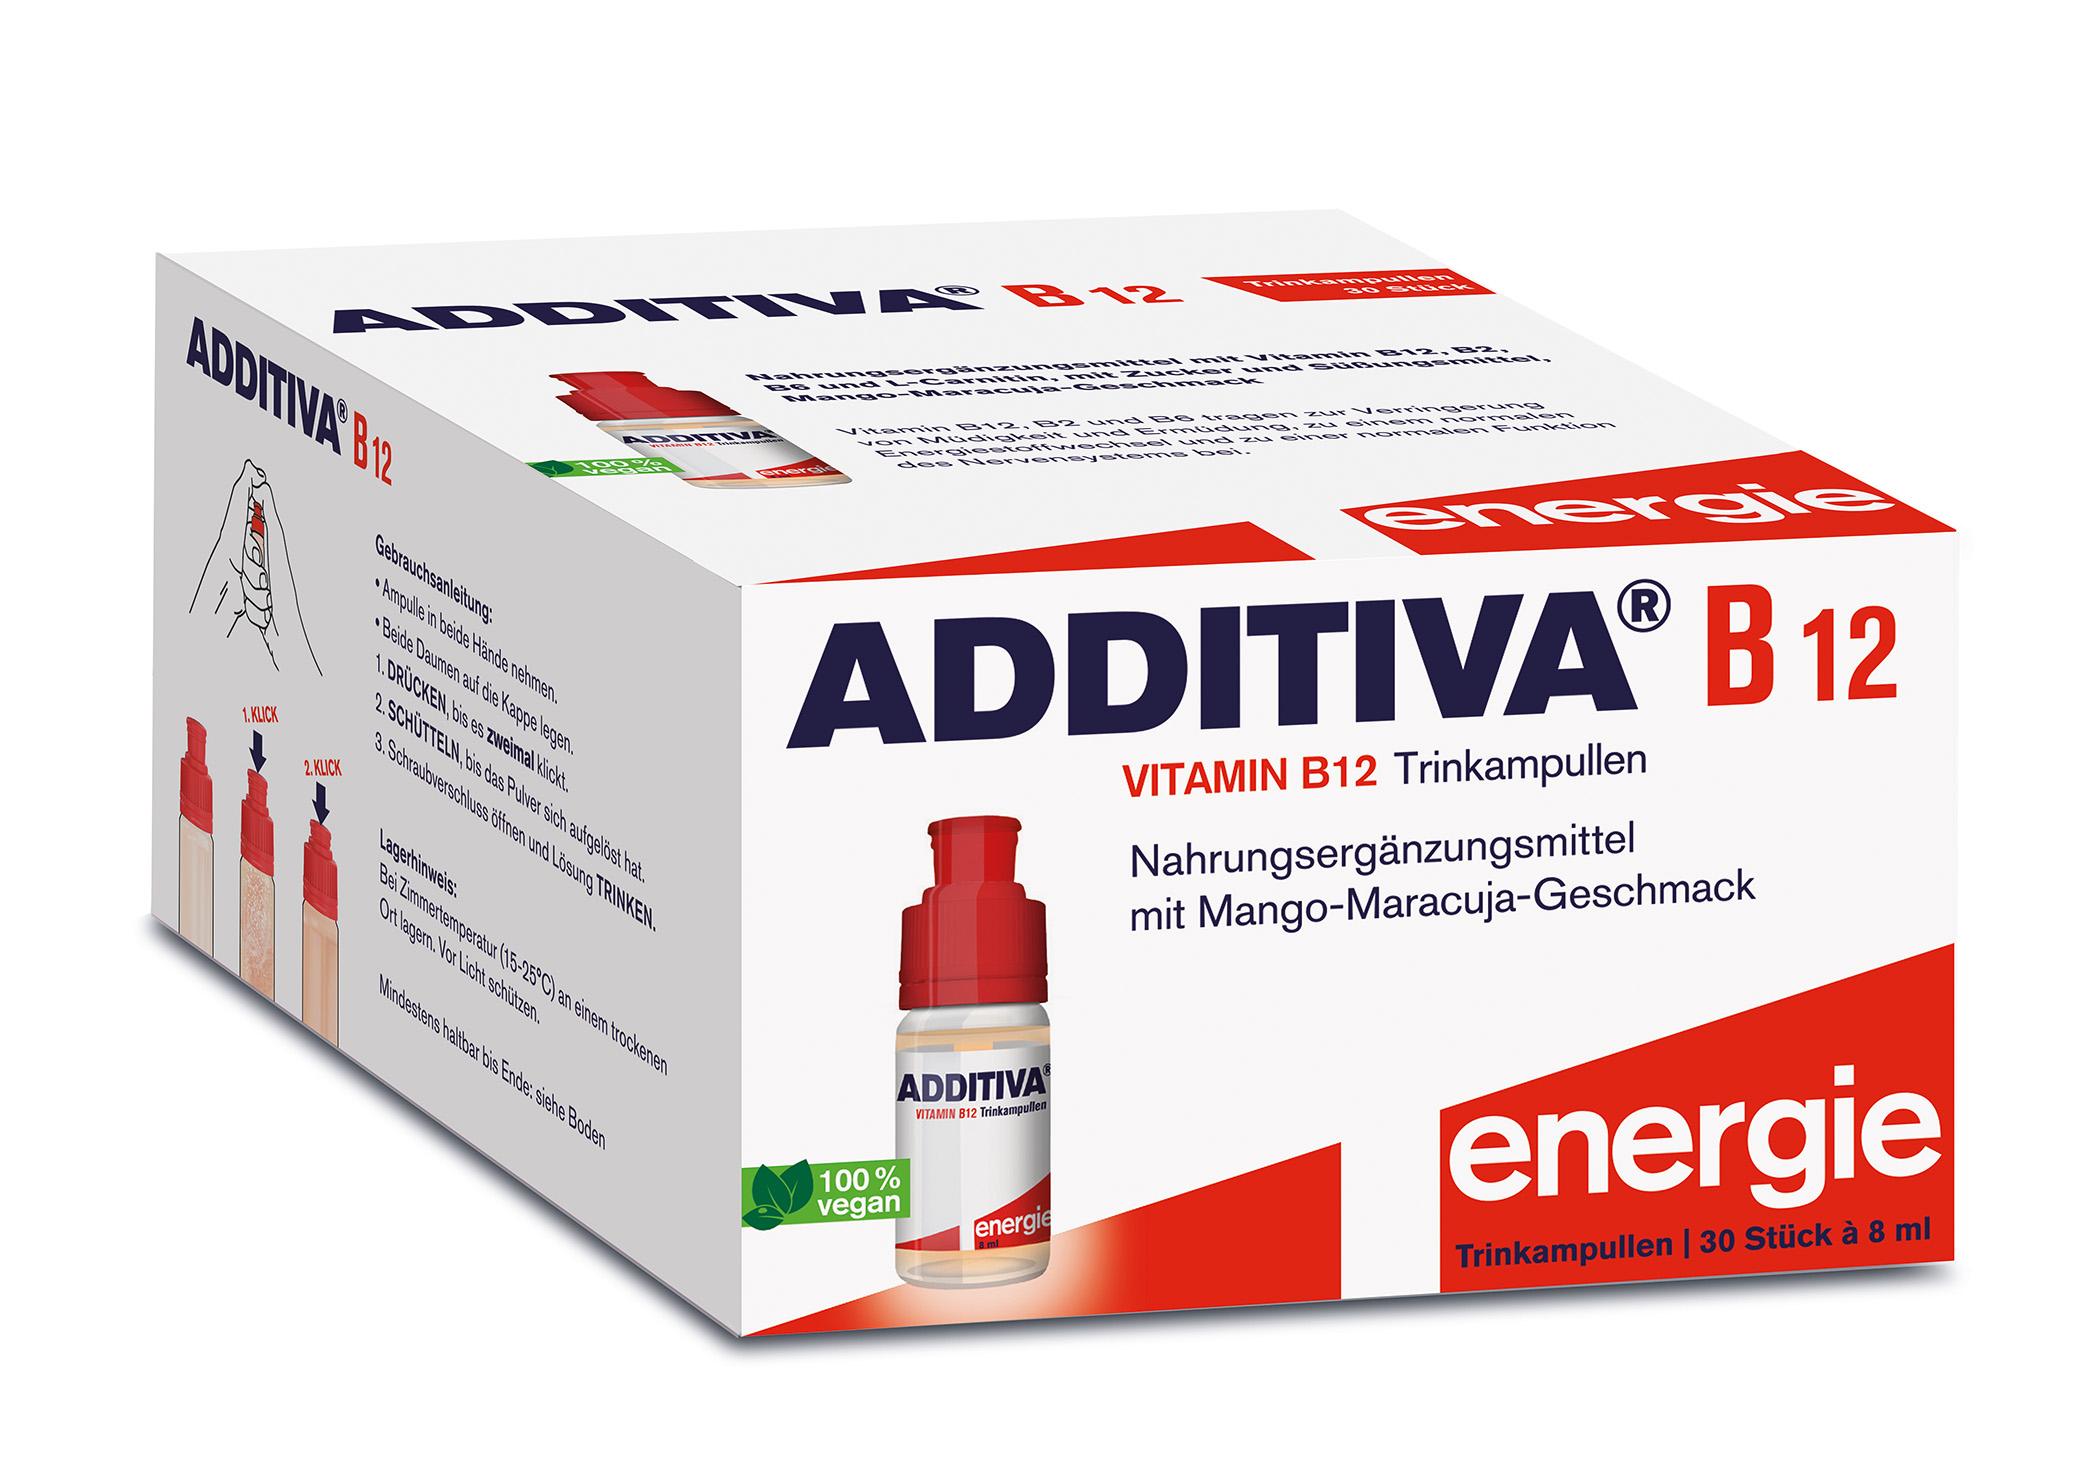 Additiva Vitamin B12 Trinkampullen (30x8 ml)